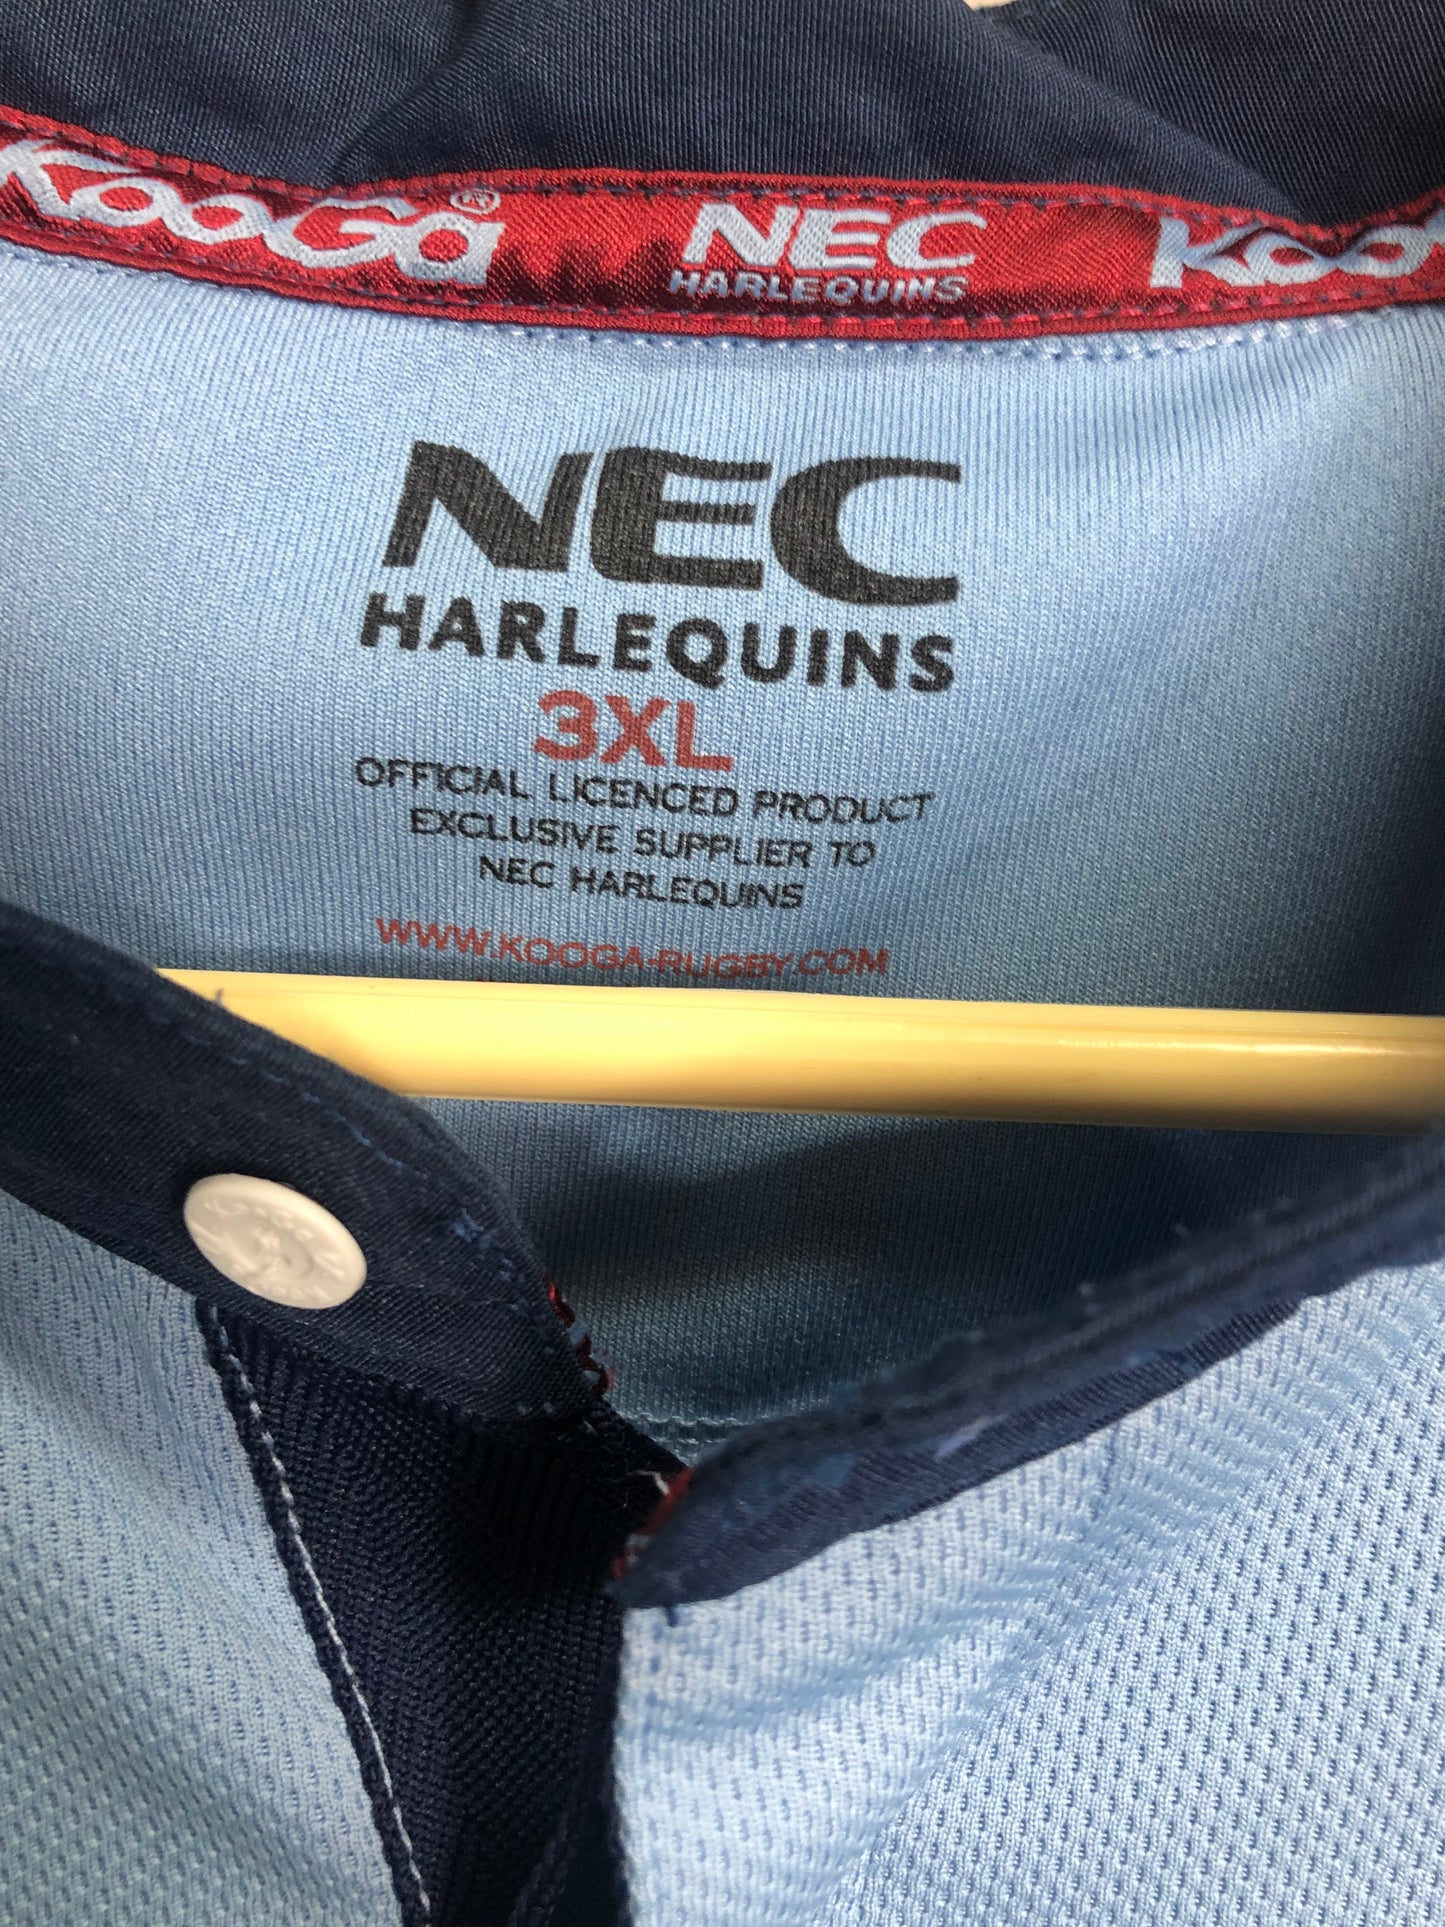 NEC Harlequins Vintage Rugby Shirt - 47” Chest - 3XL